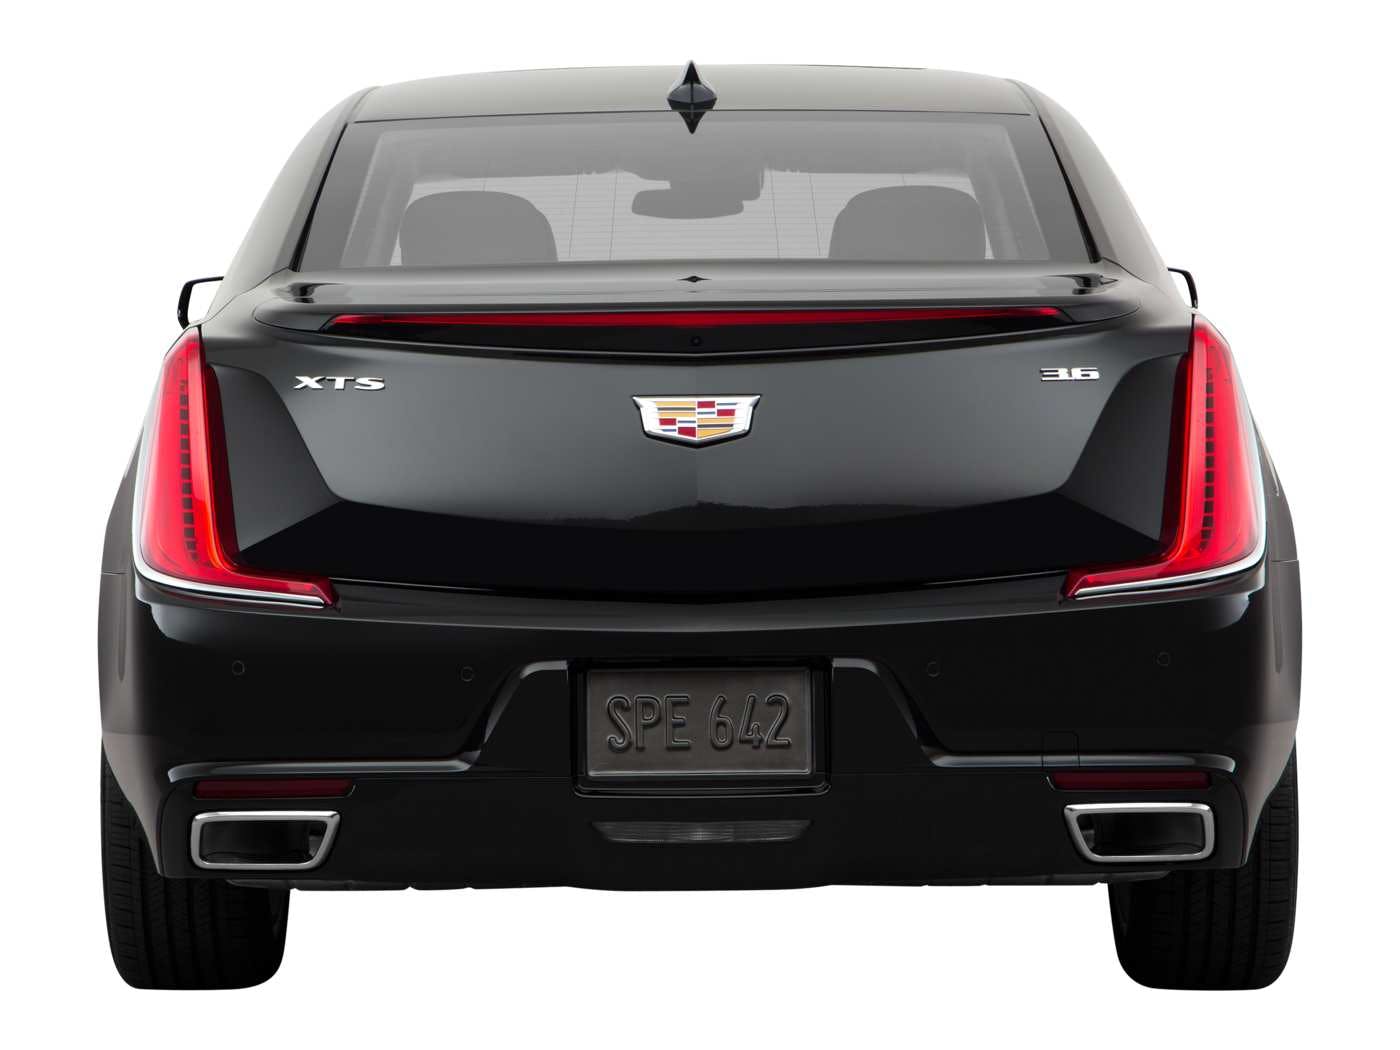 2018 Cadillac XTS Review | Pricing, Trims & Photos - TrueCar